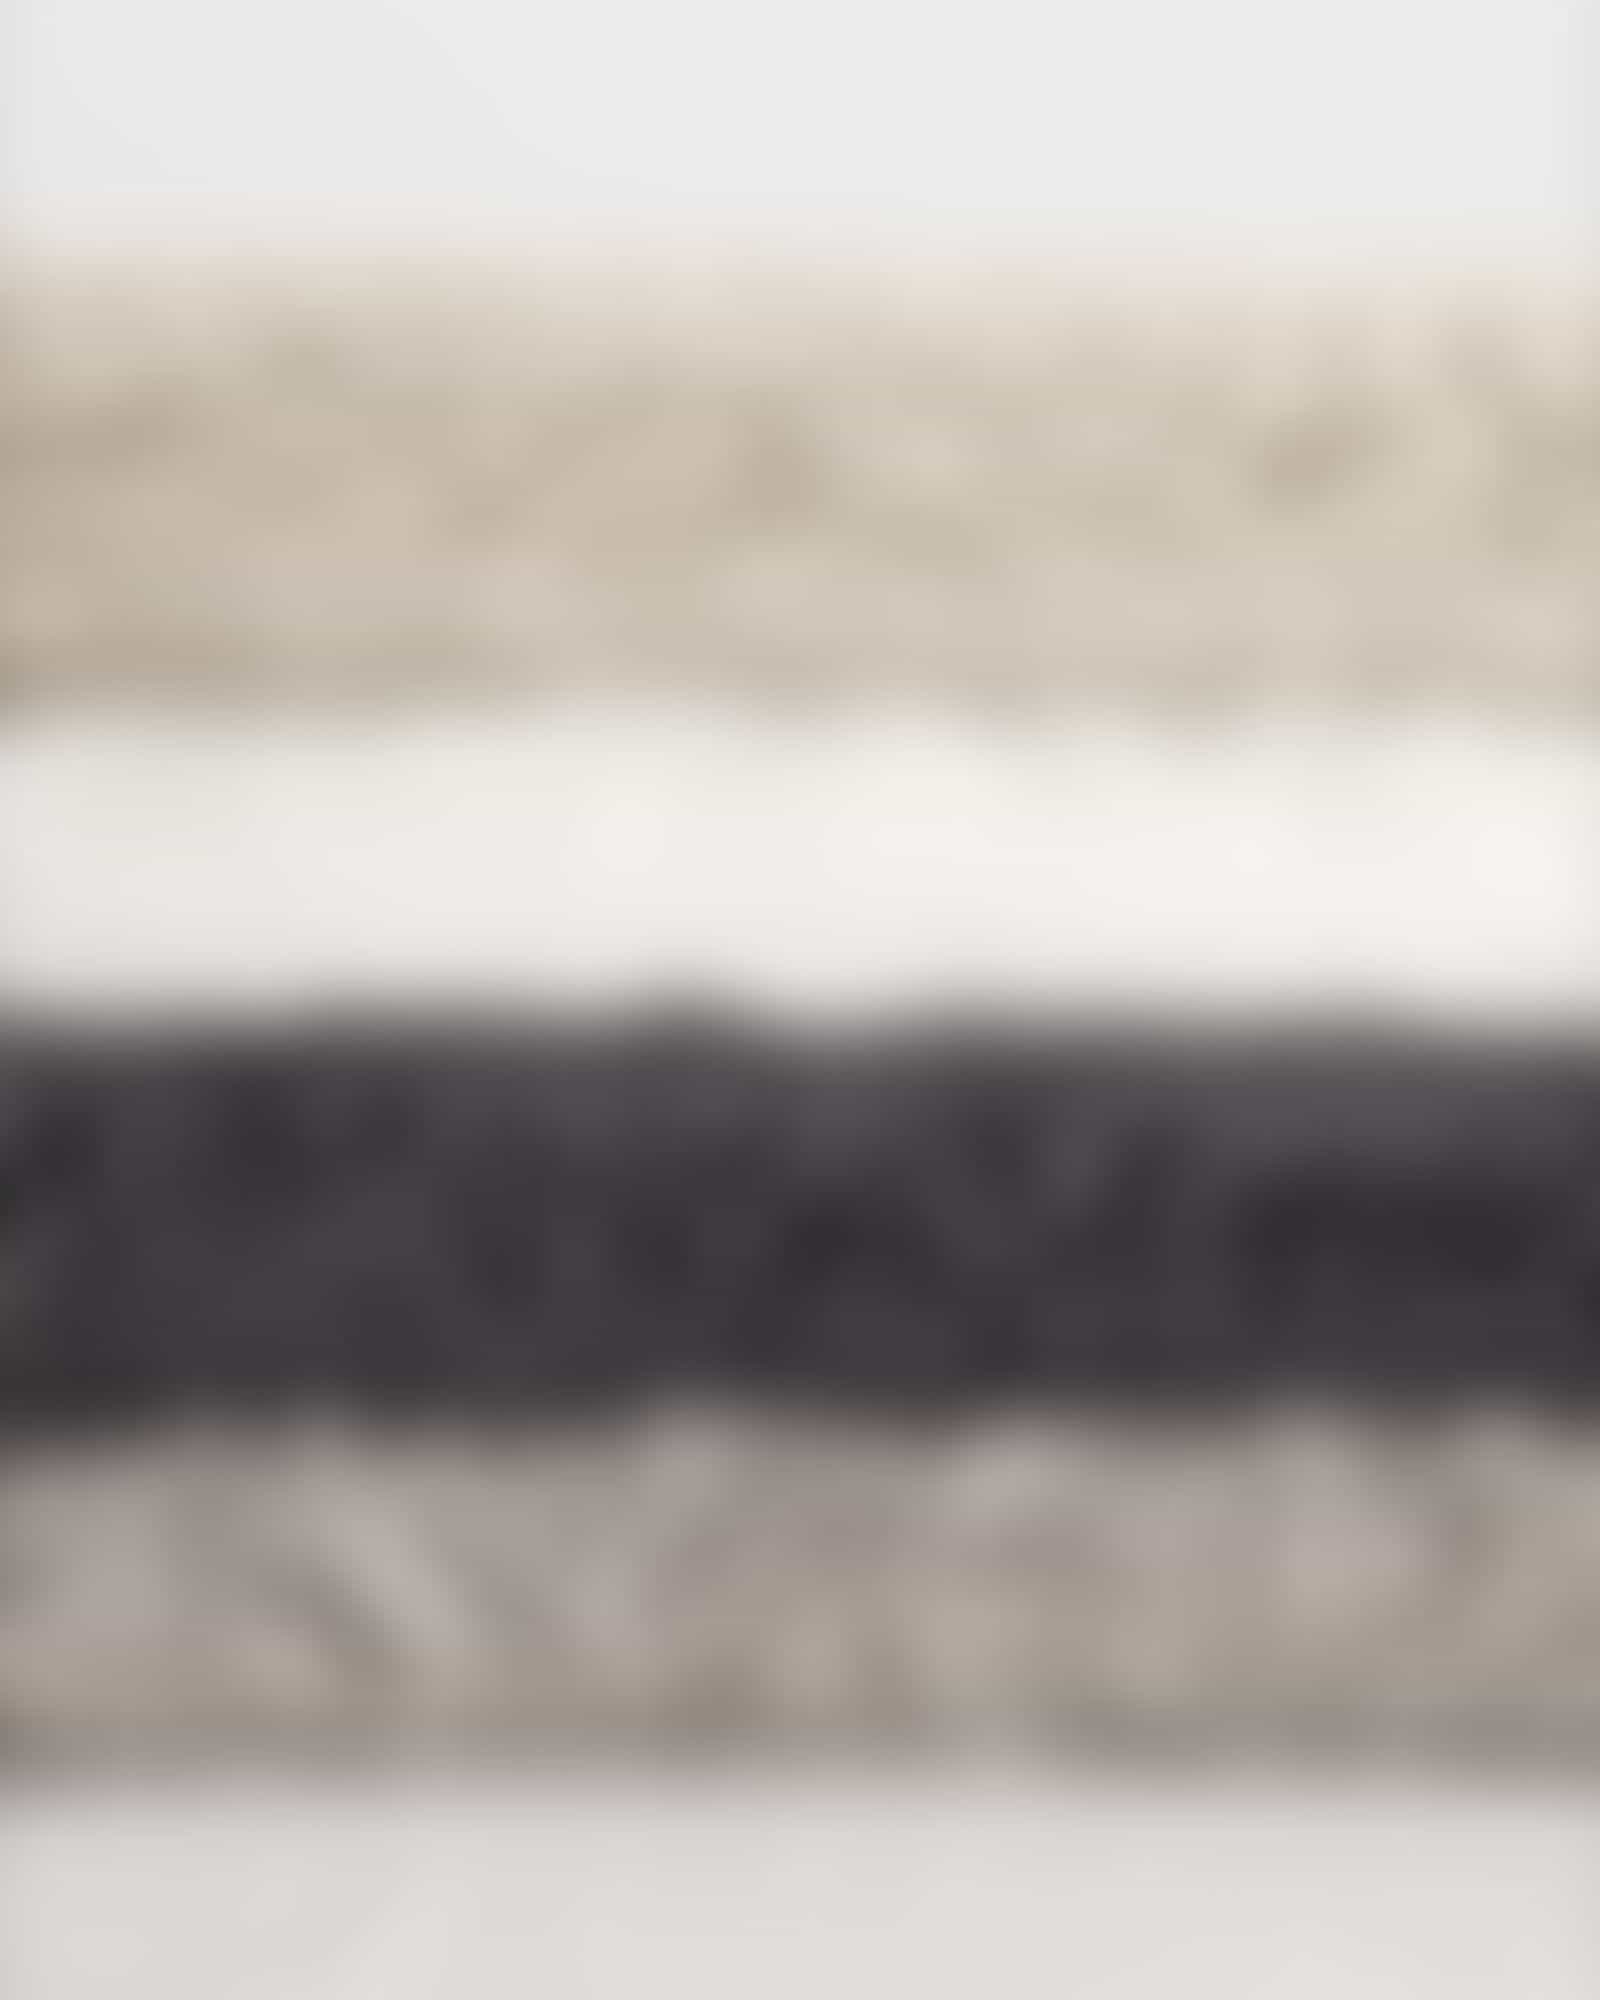 Cawö Home Badteppich Frame 1006 - Farbe: weiß - 600 - 60x100 cm